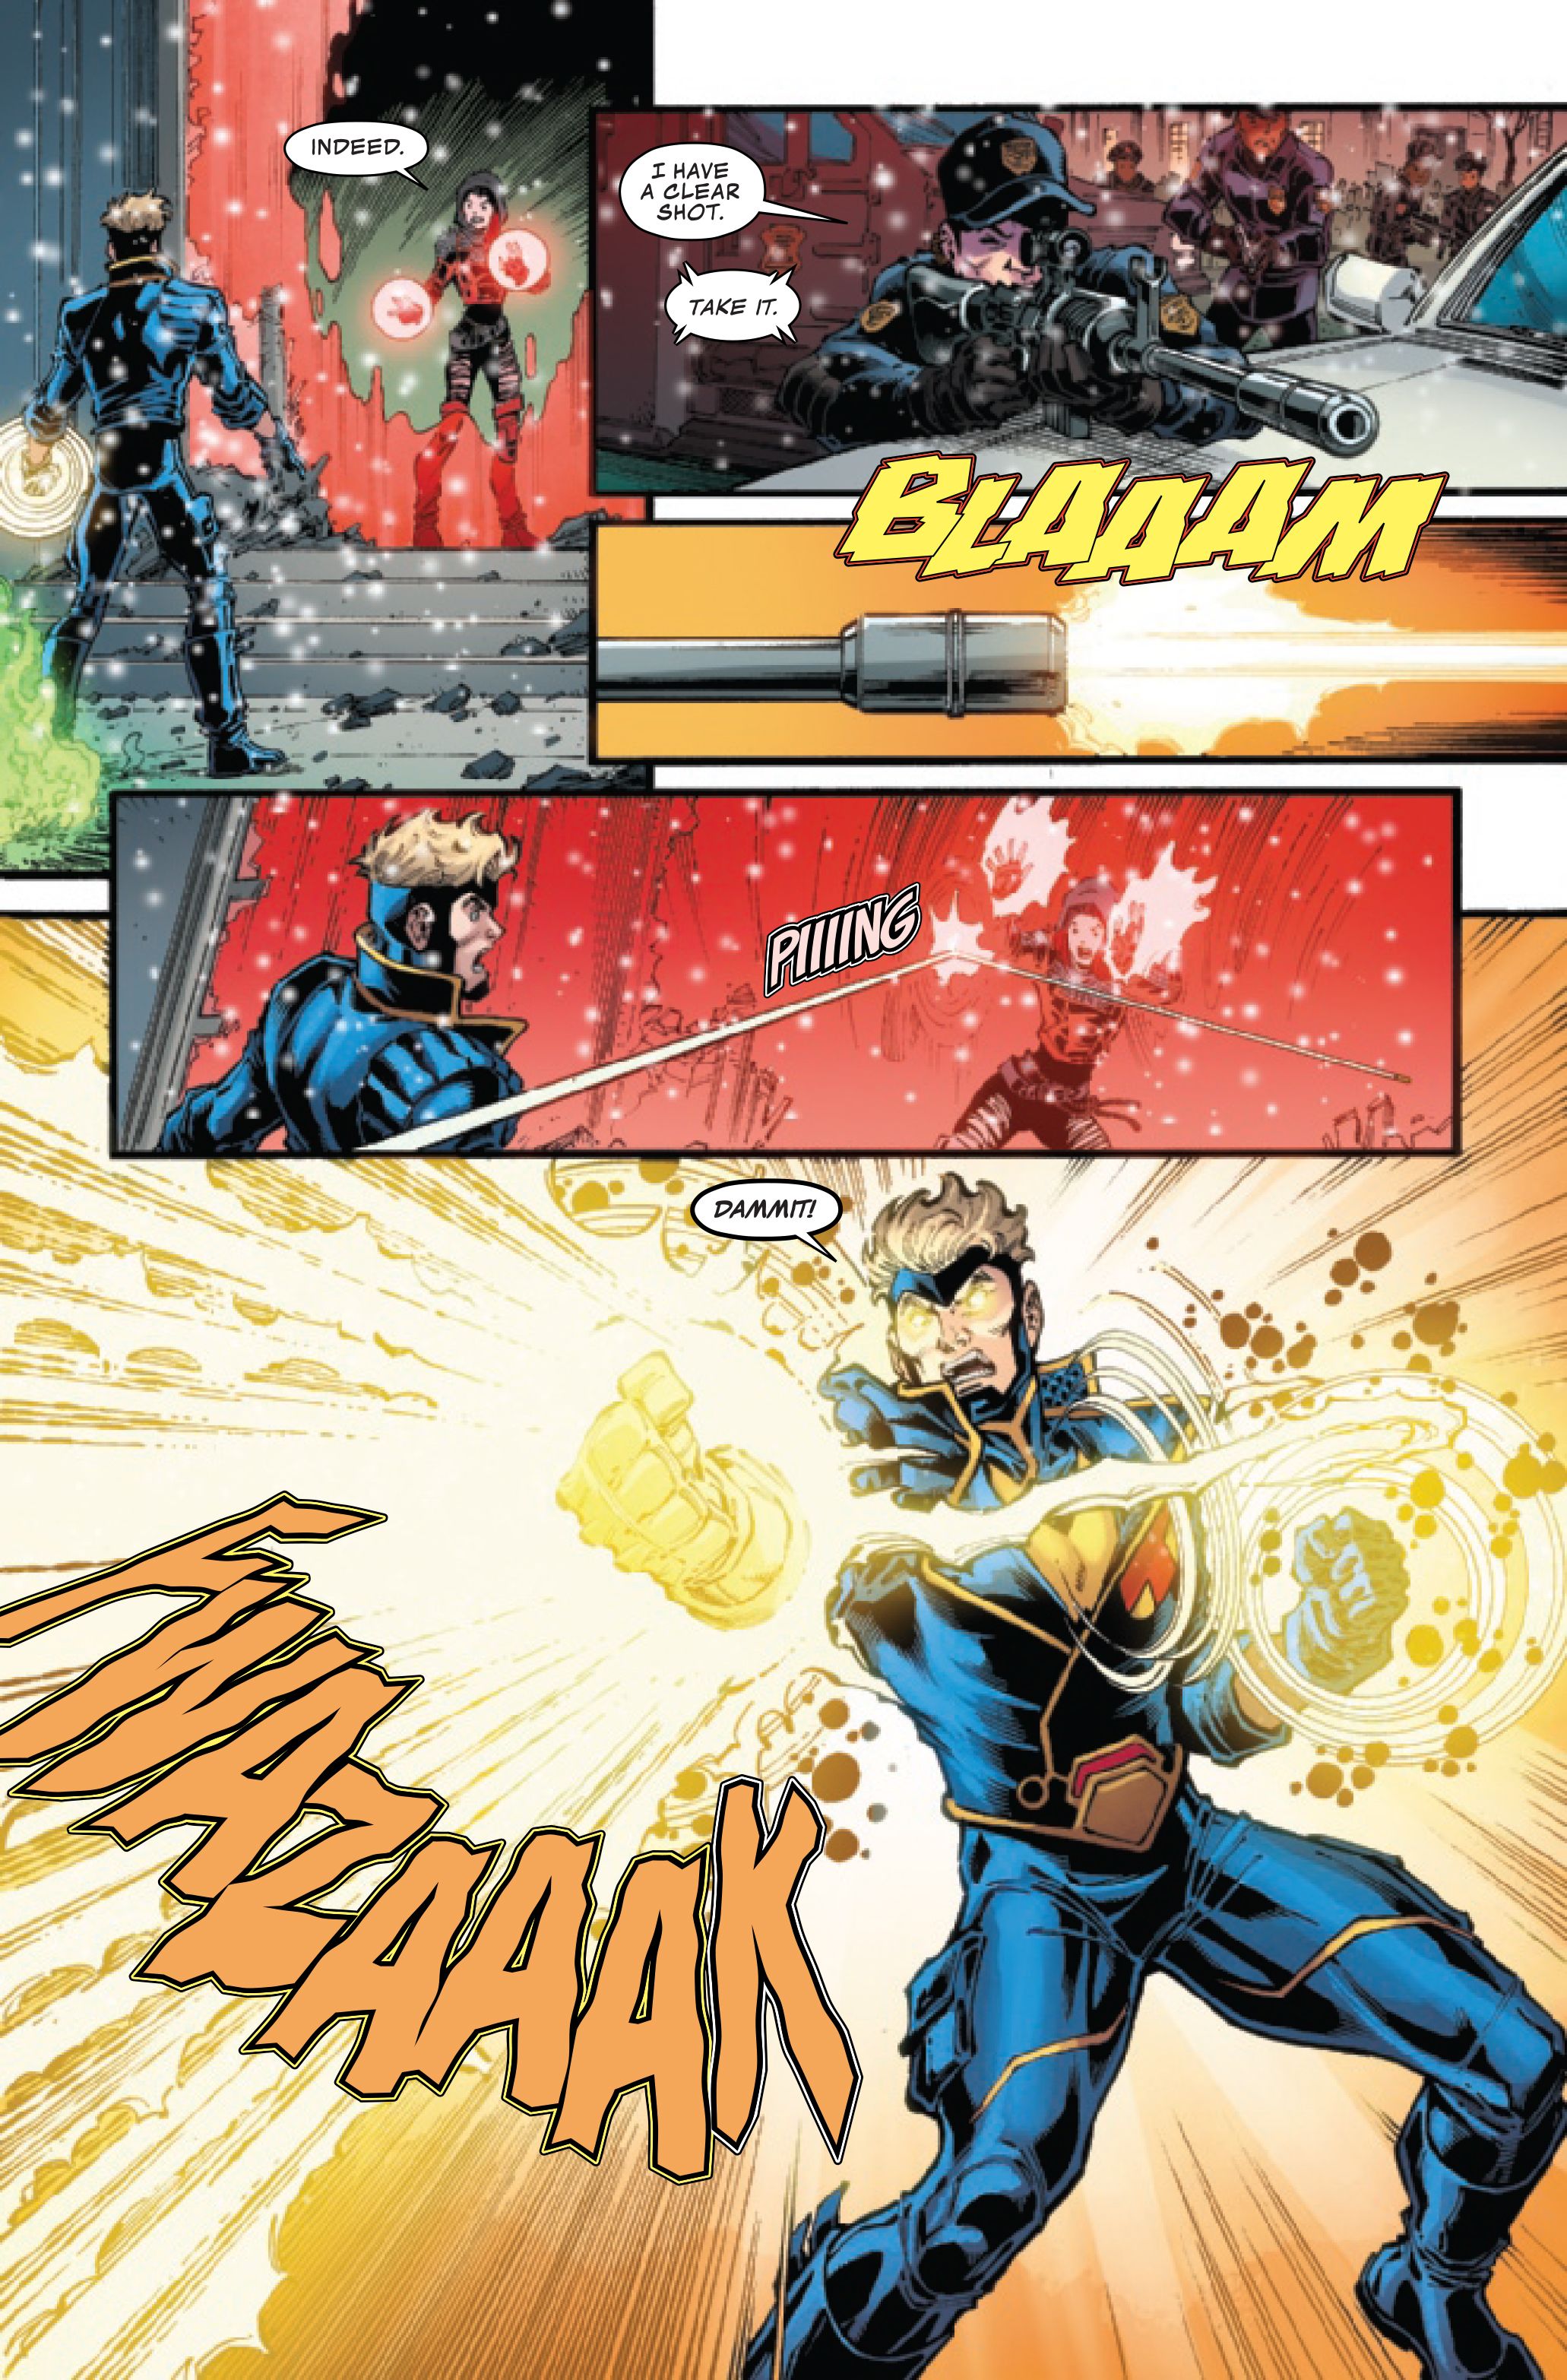 Page 4 of X-Men Legends #6, by Peter David, Todd Nauck, Rachelle Rosenberg and VC's Joe Caramagna.